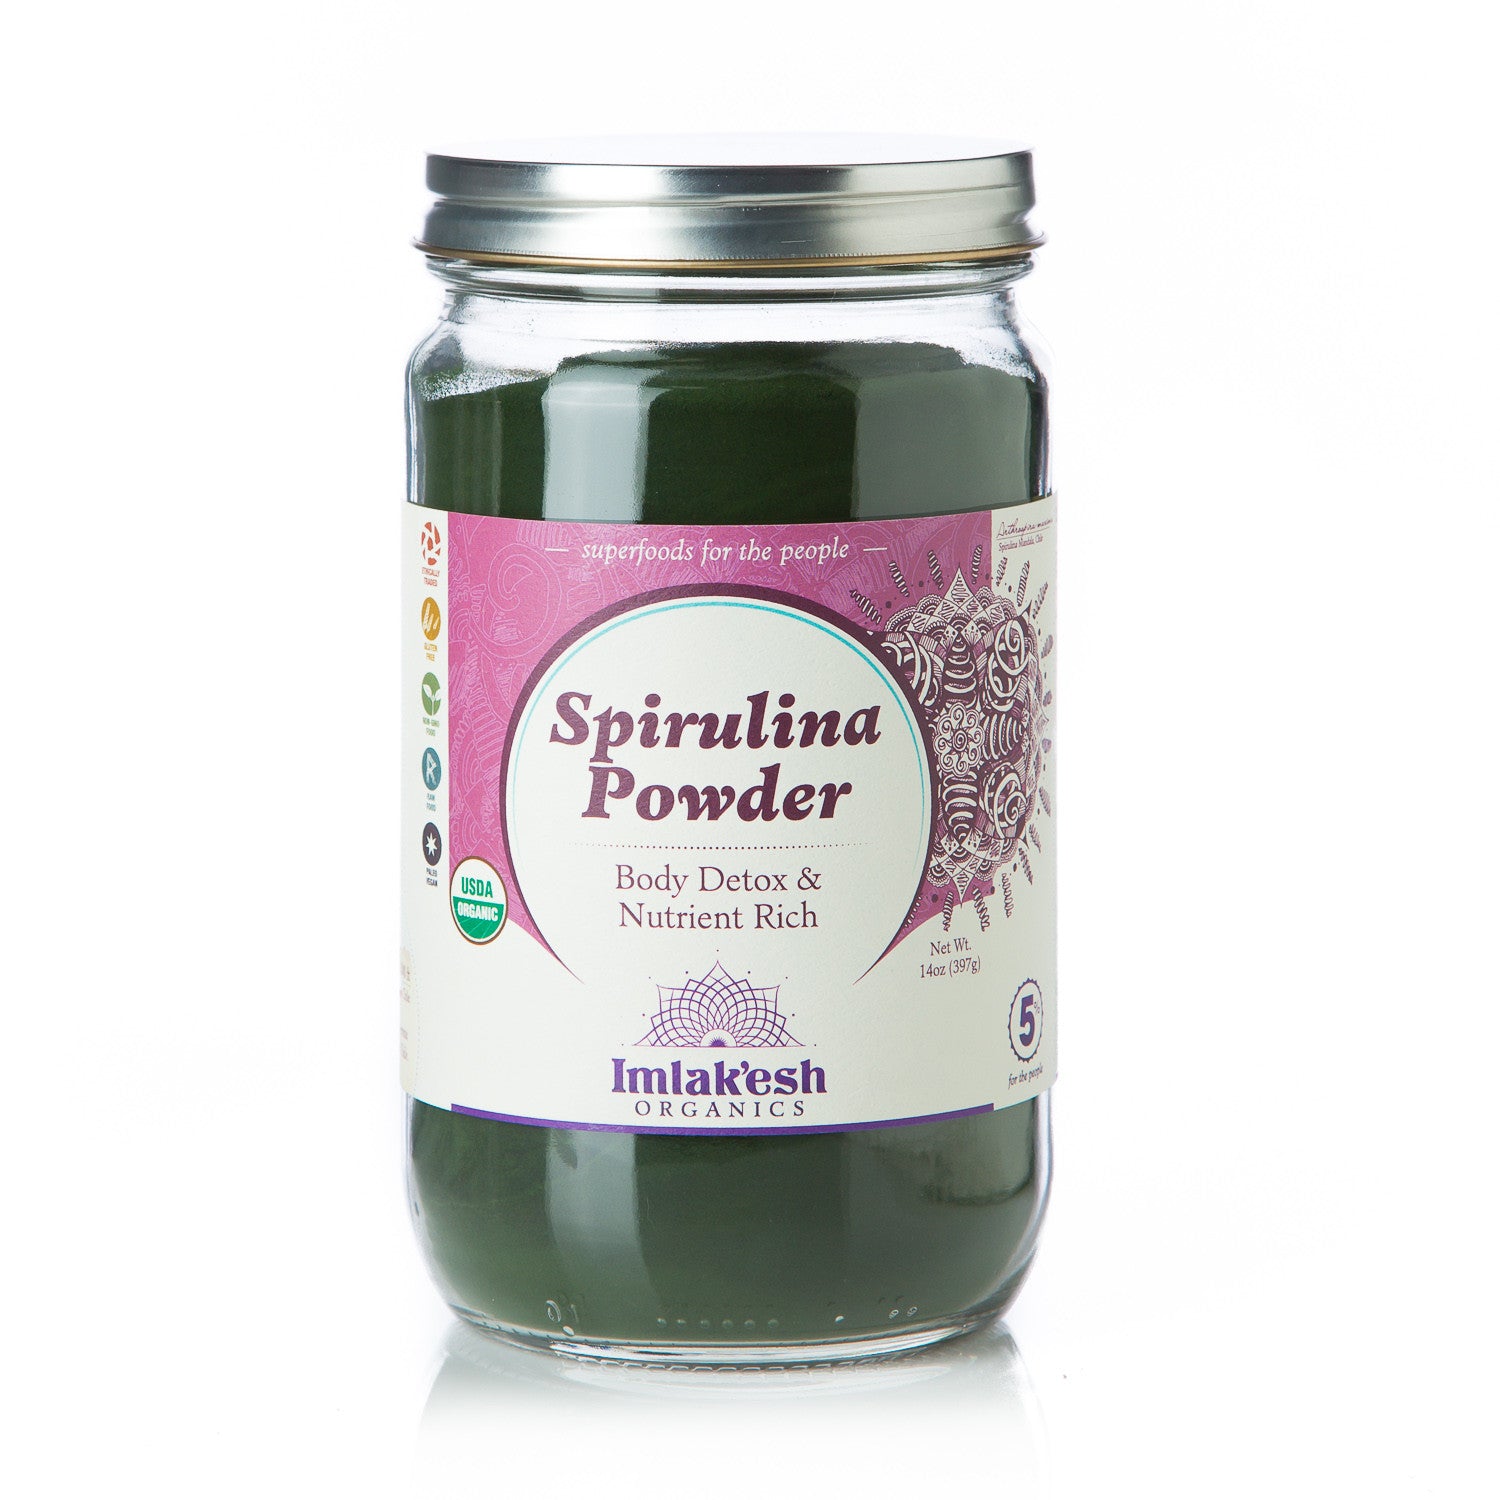 Buy Spirulina online on